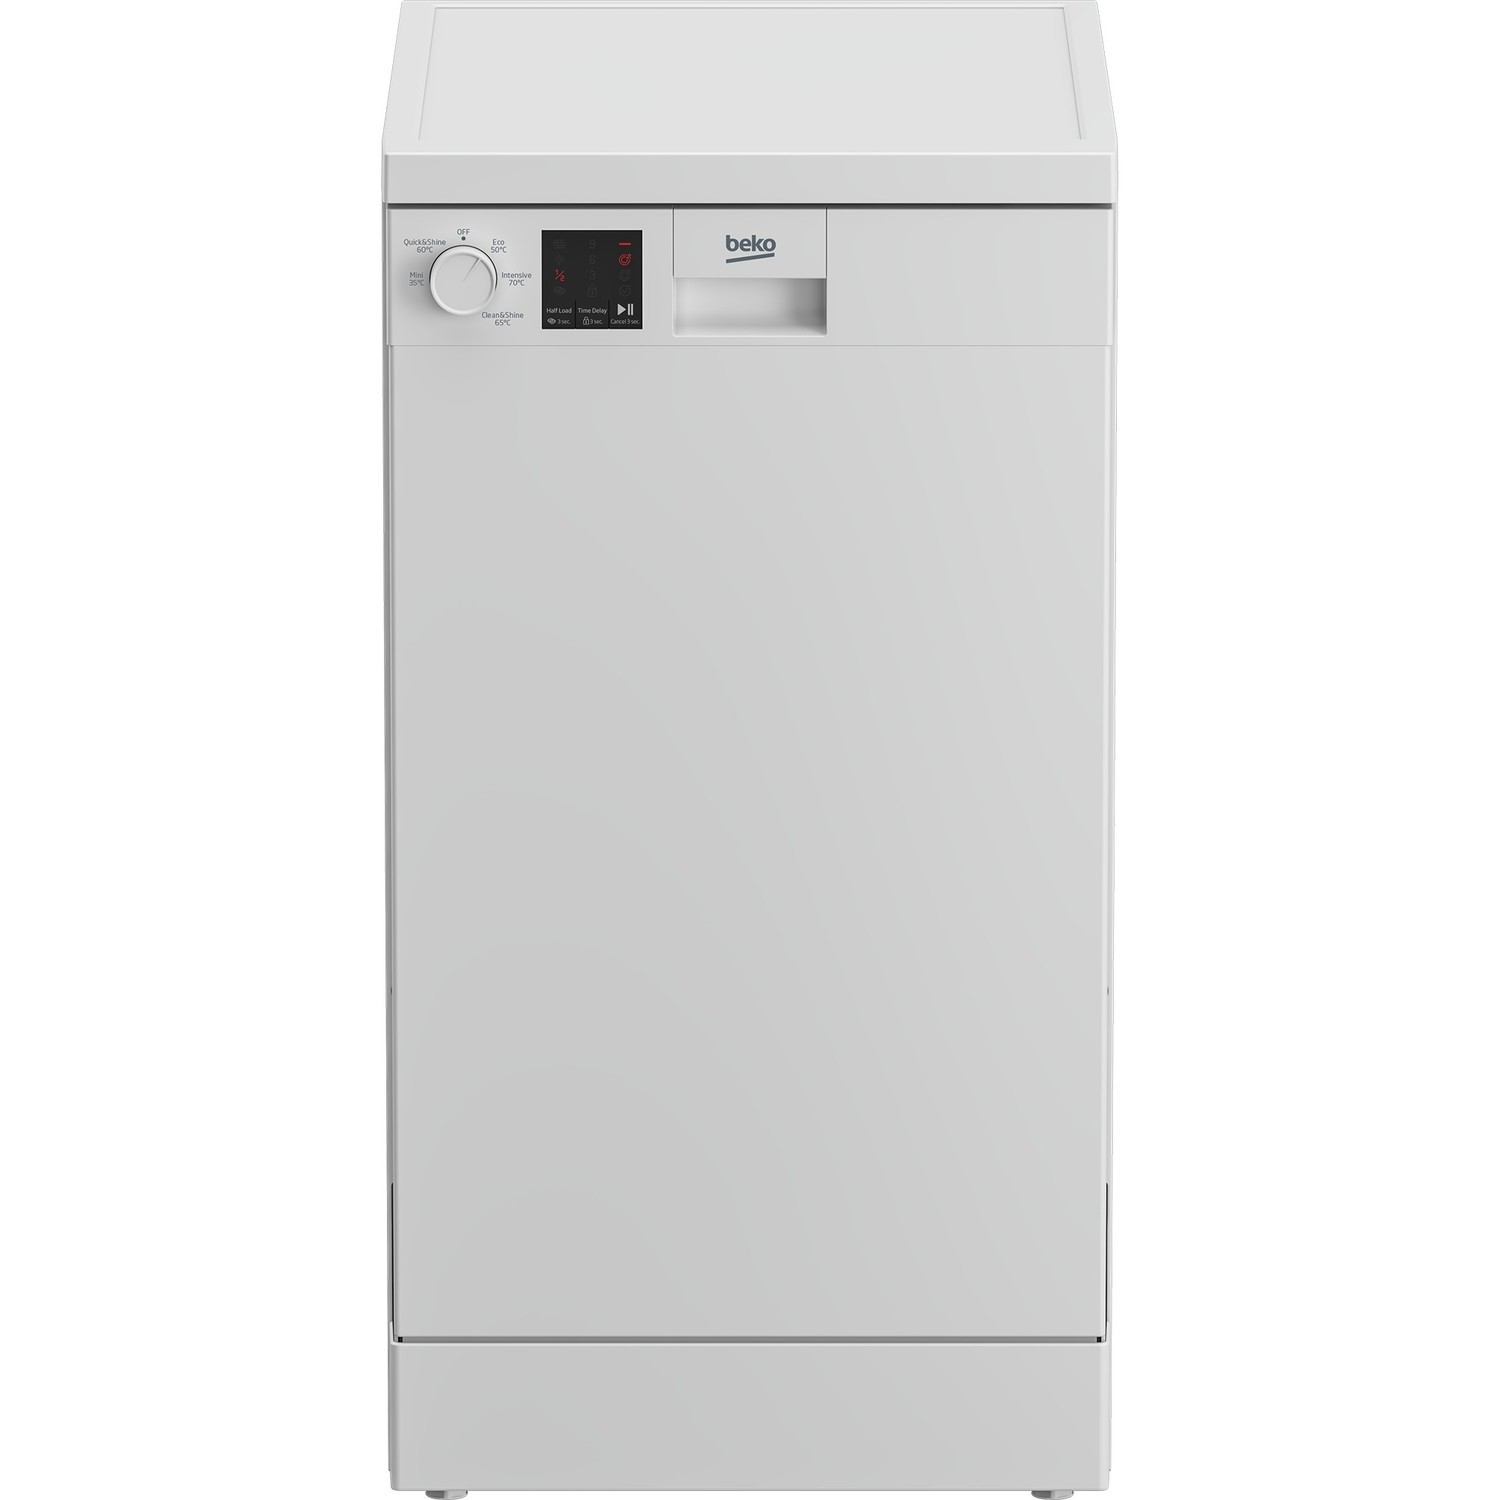 Refurbished Beko DVS05C20W Slimline 10 Place Freestanding Dishwasher